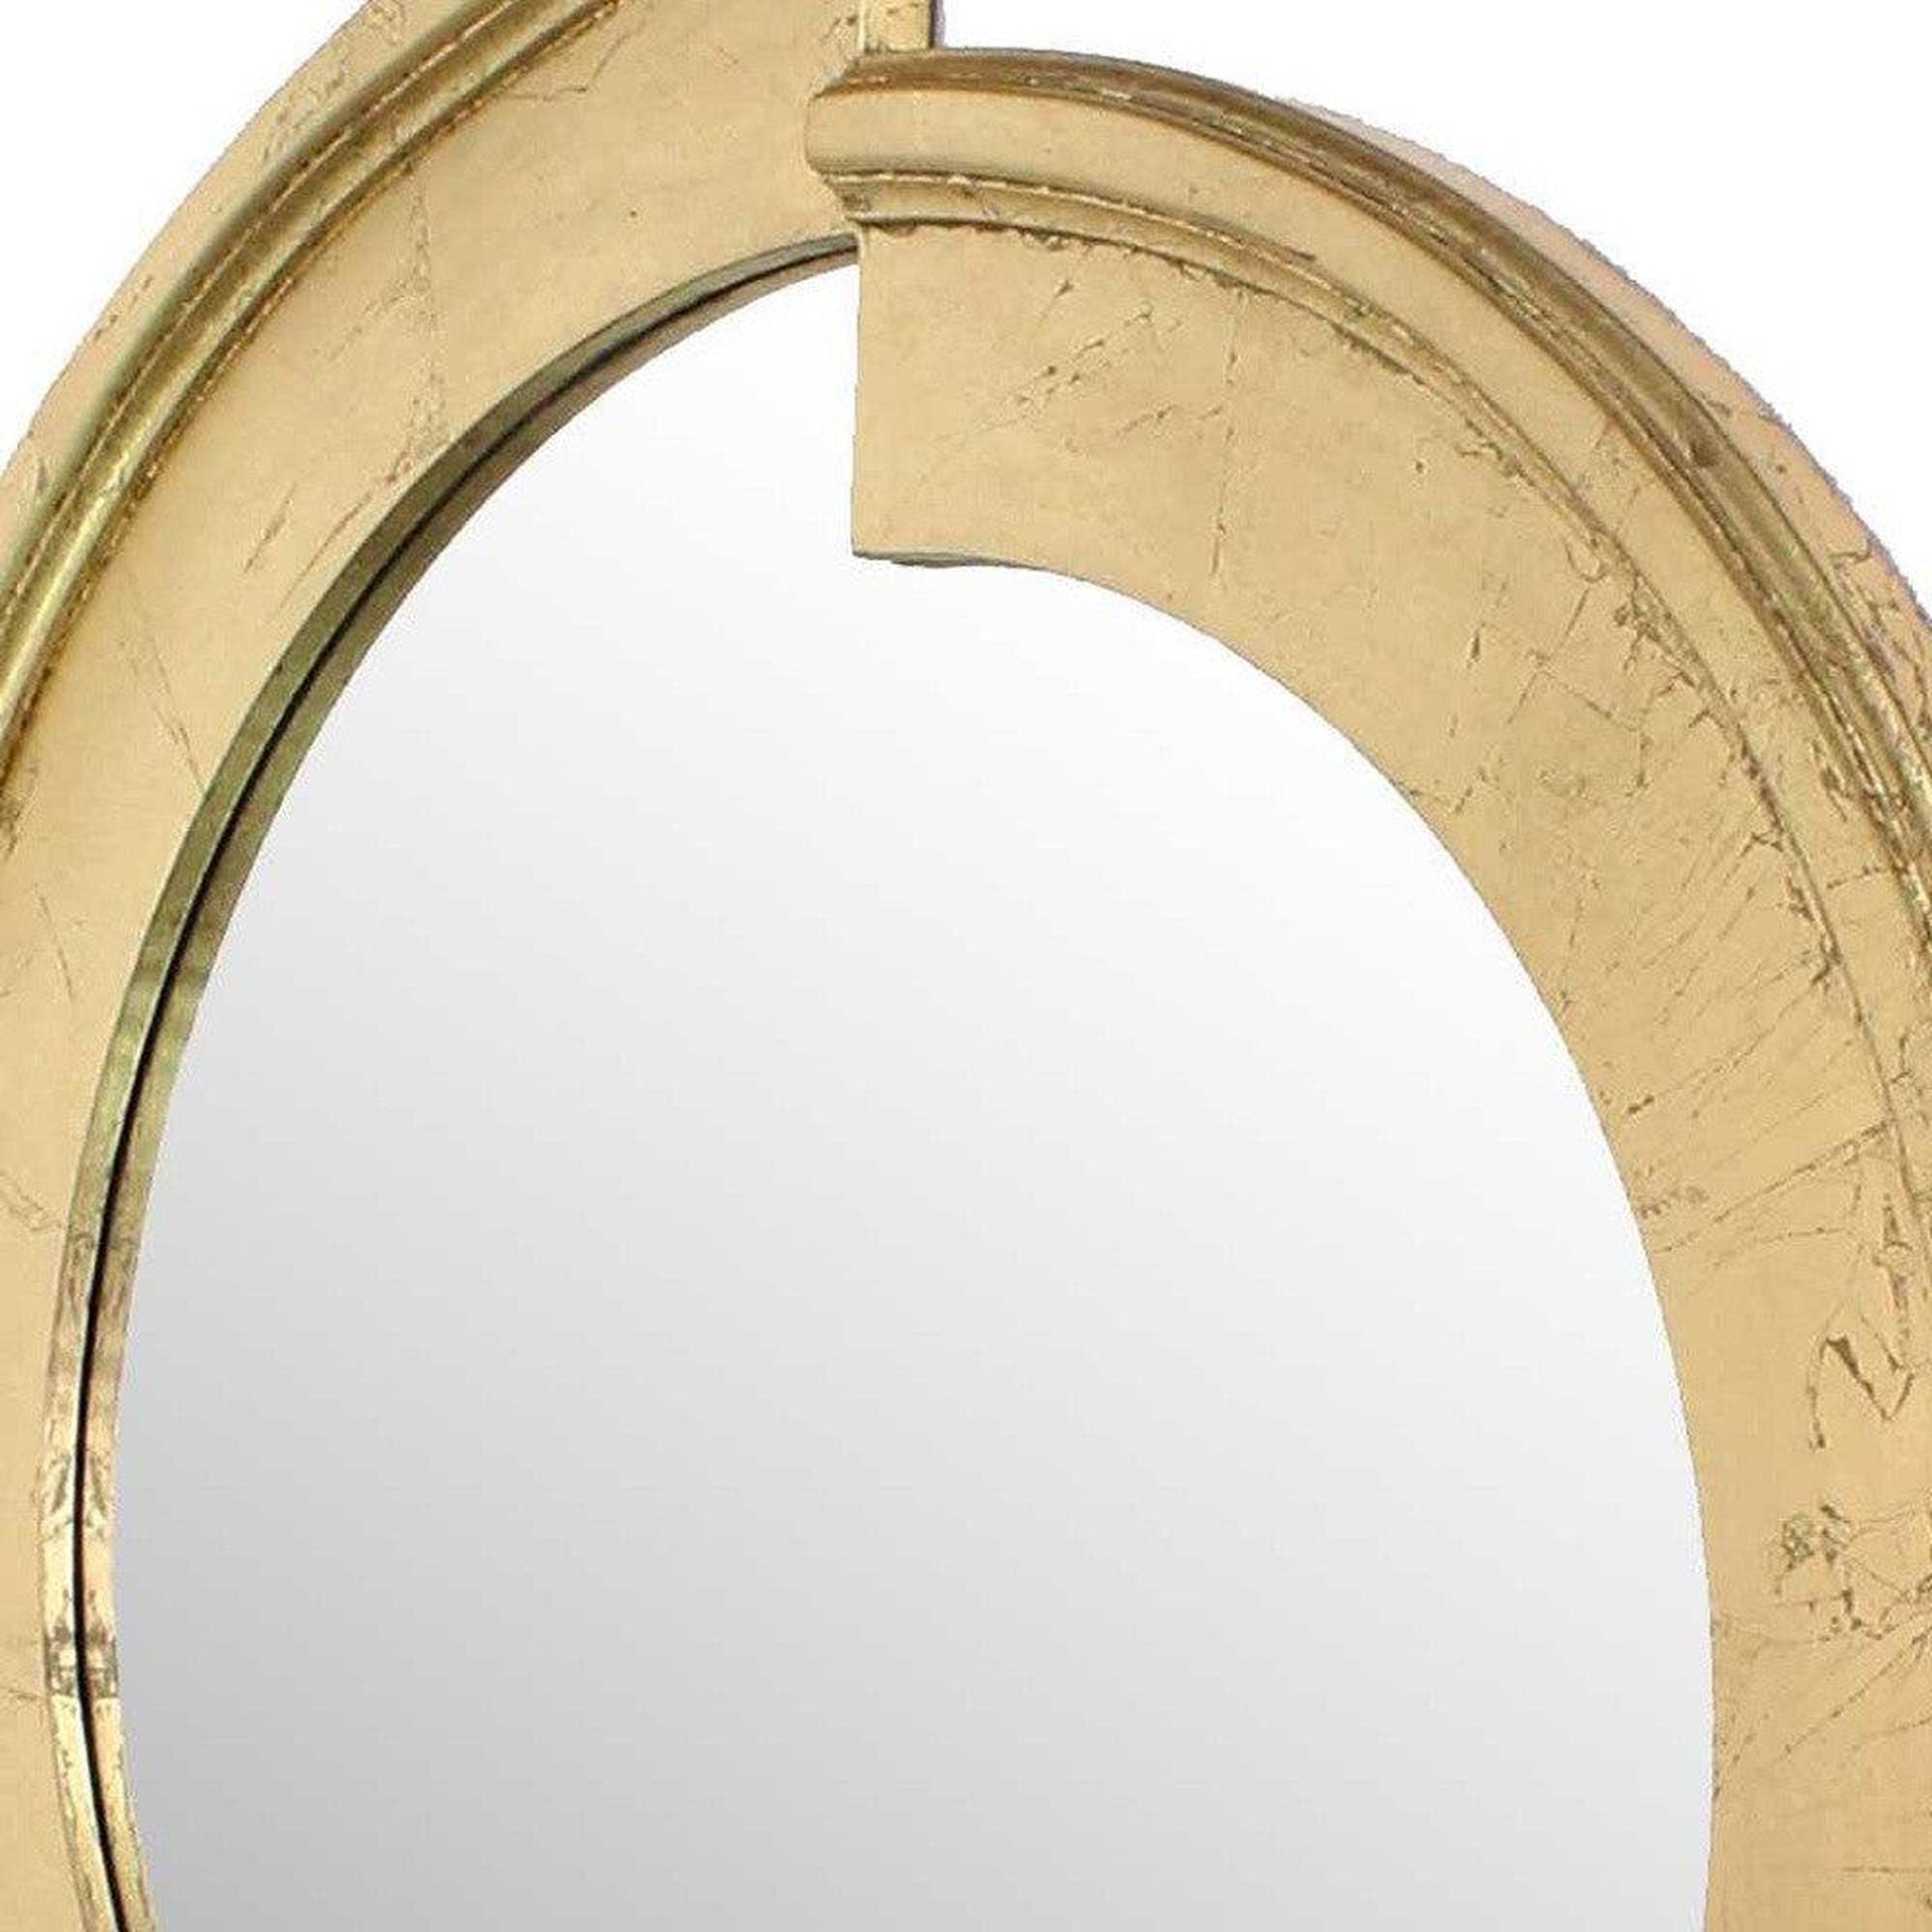 HomeRoots Gold Stylish Dressing Mirror